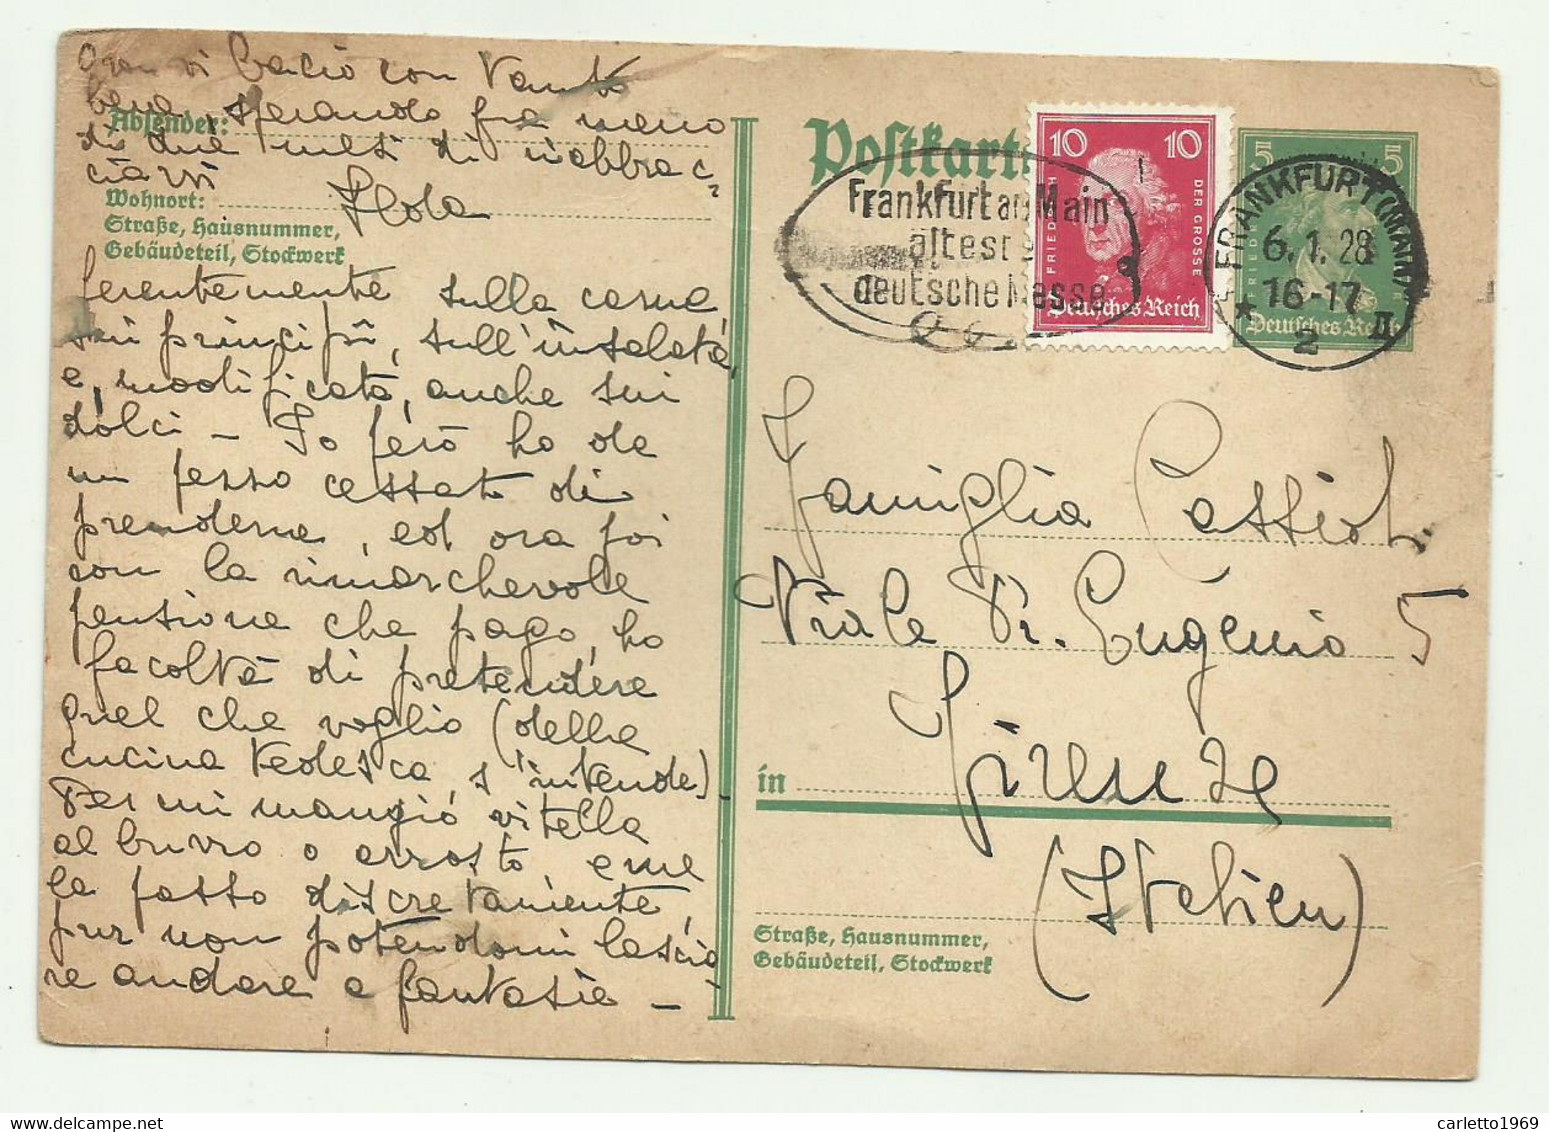 FELDPOST FRANKFURT ( MAIN ) 1928 - Lettres & Documents